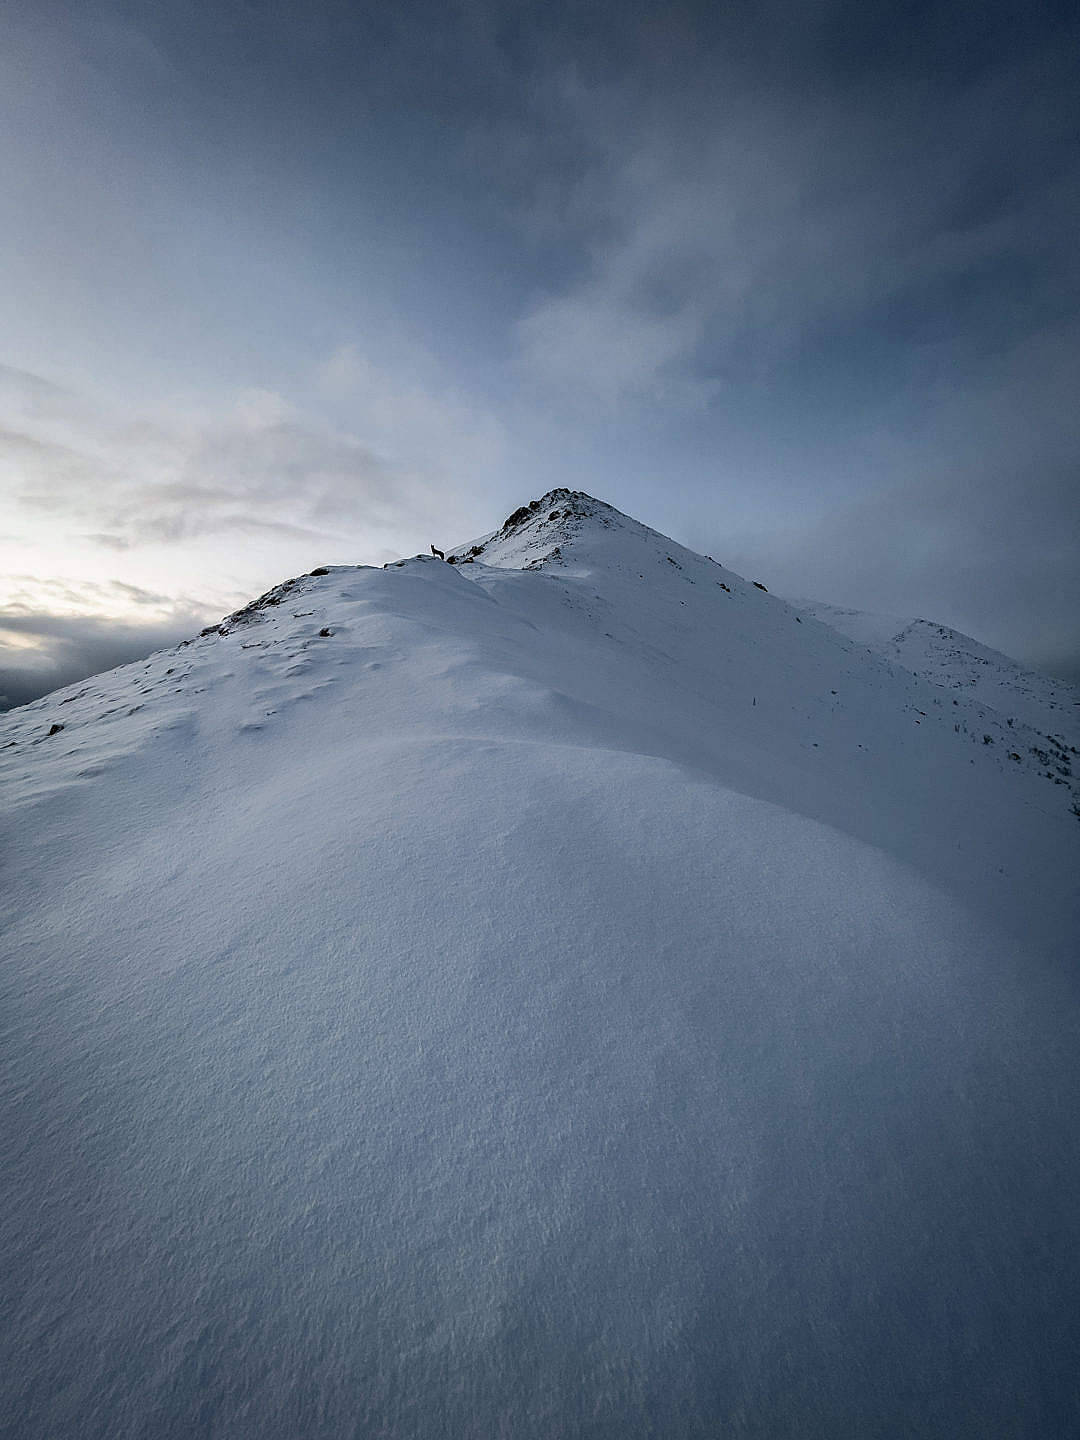 Snow-capped Hd Mountain Ridges